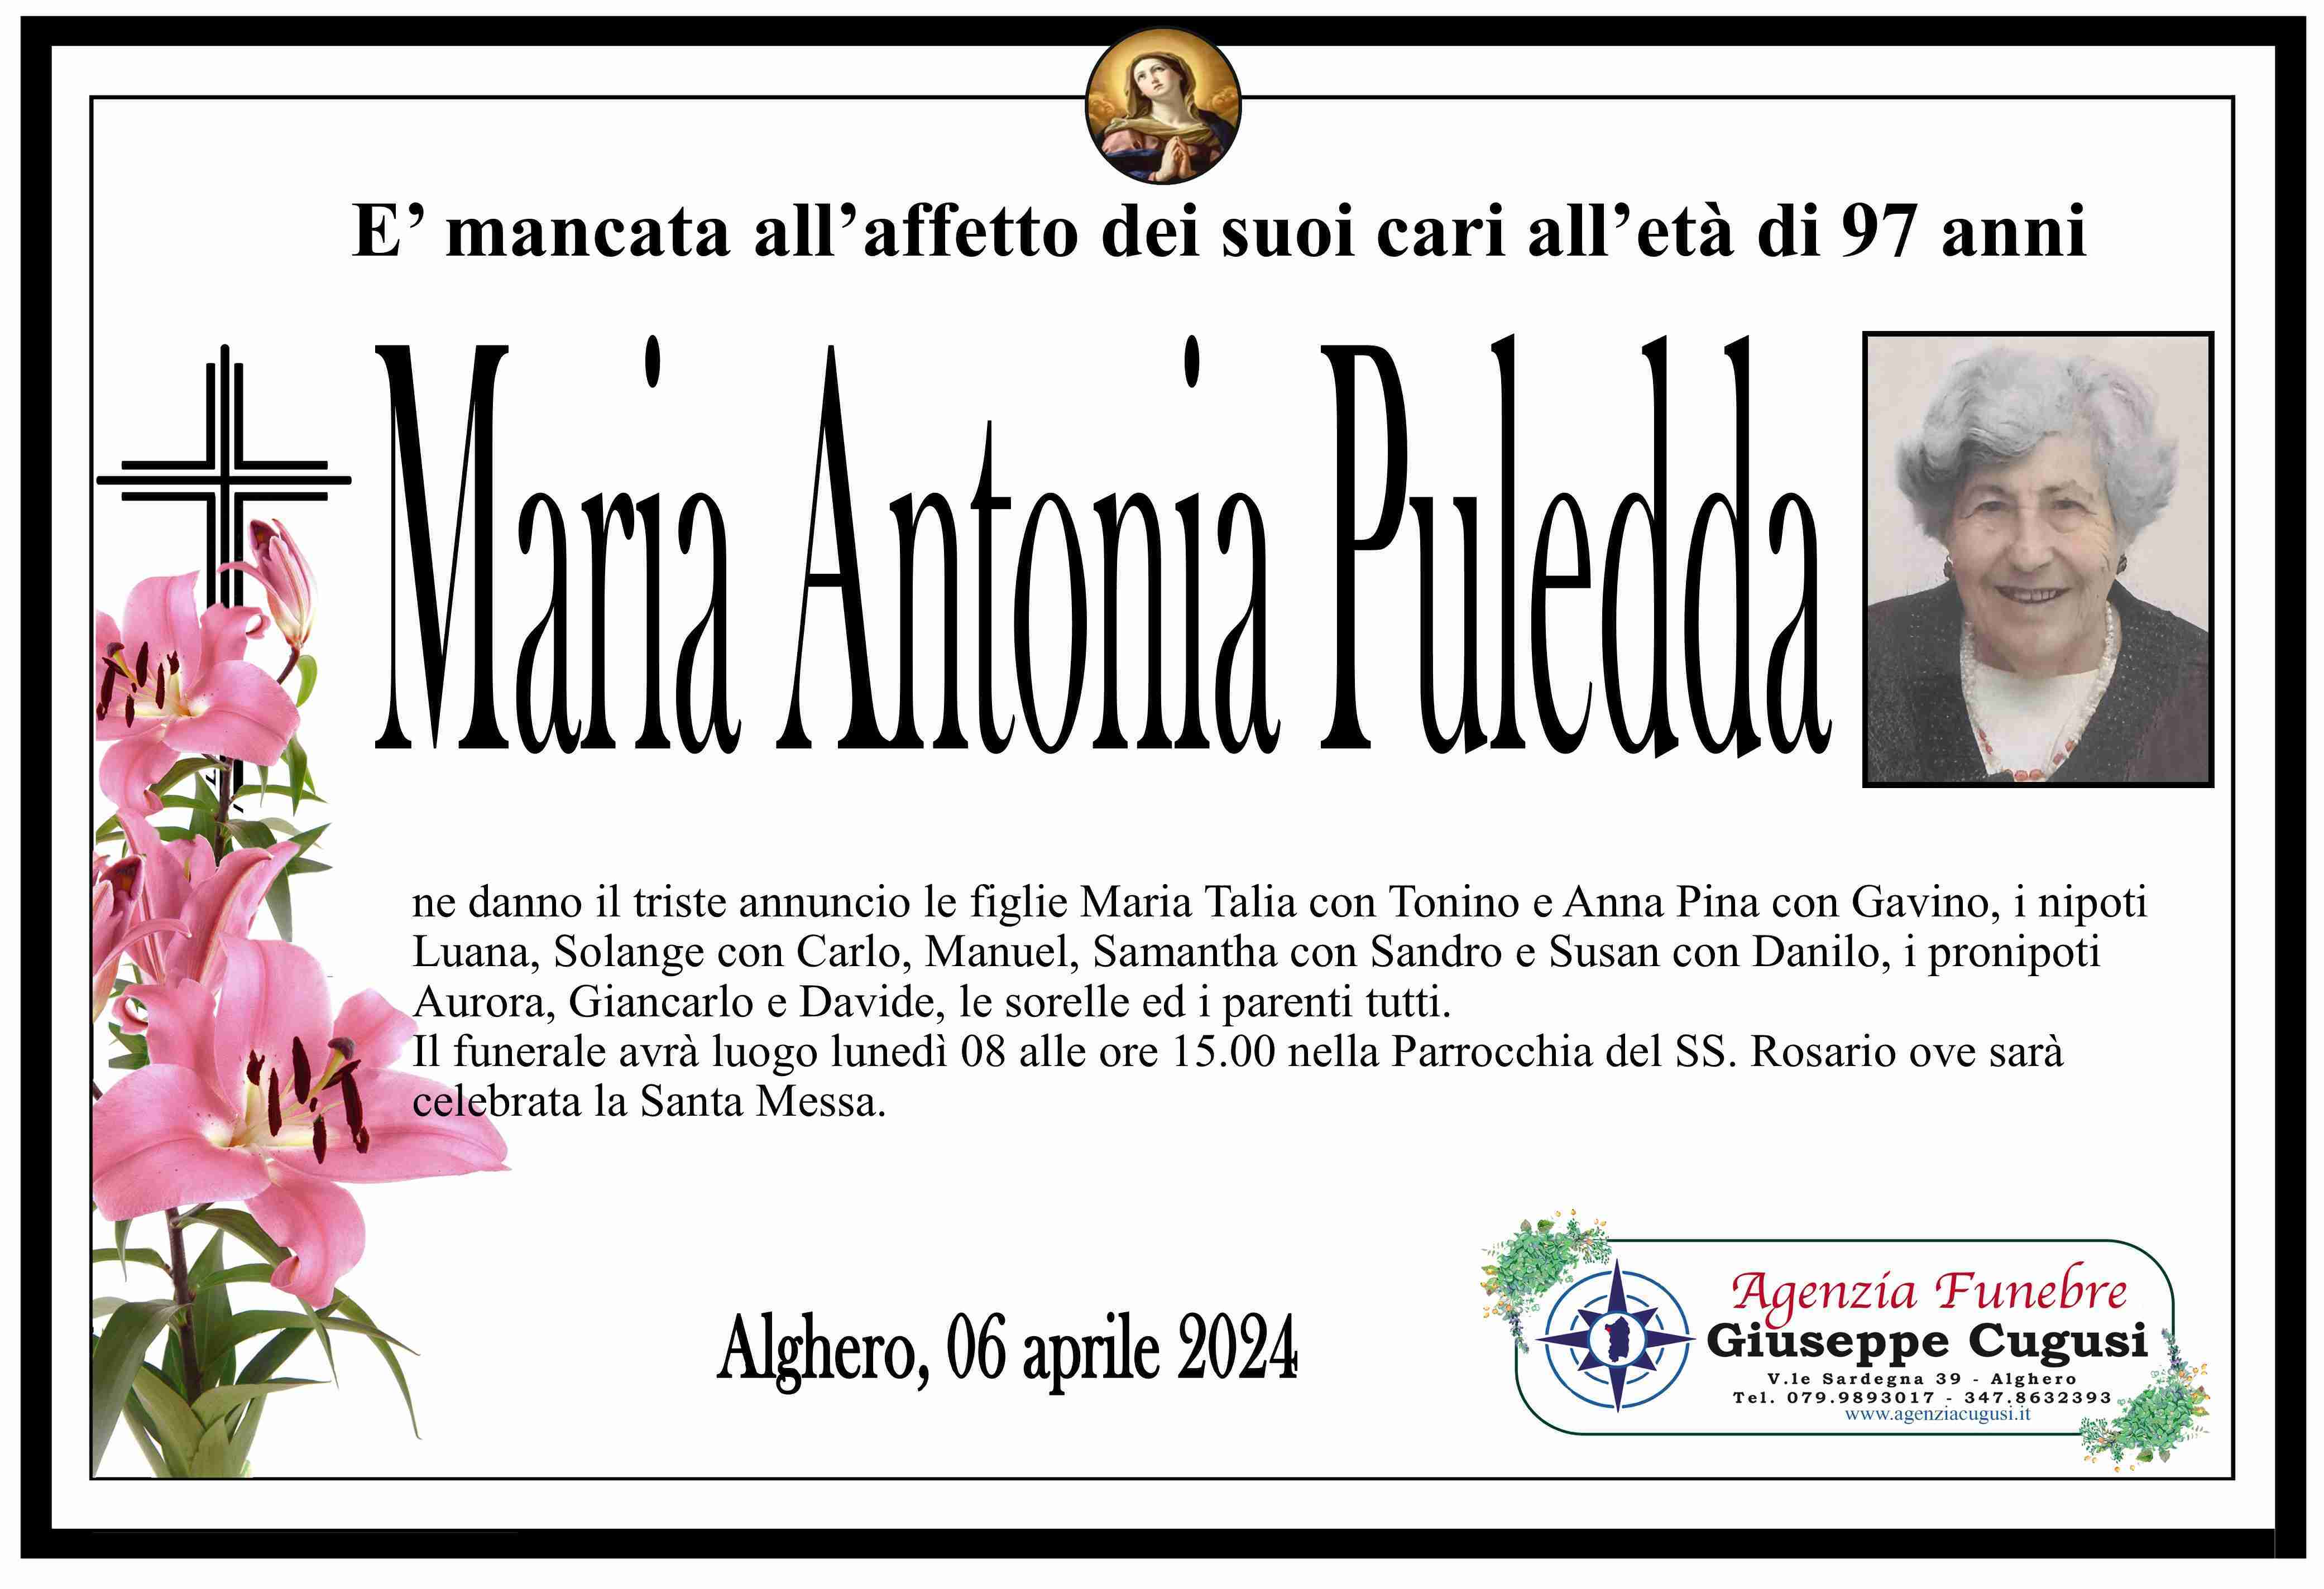 Maria Antonia Puledda